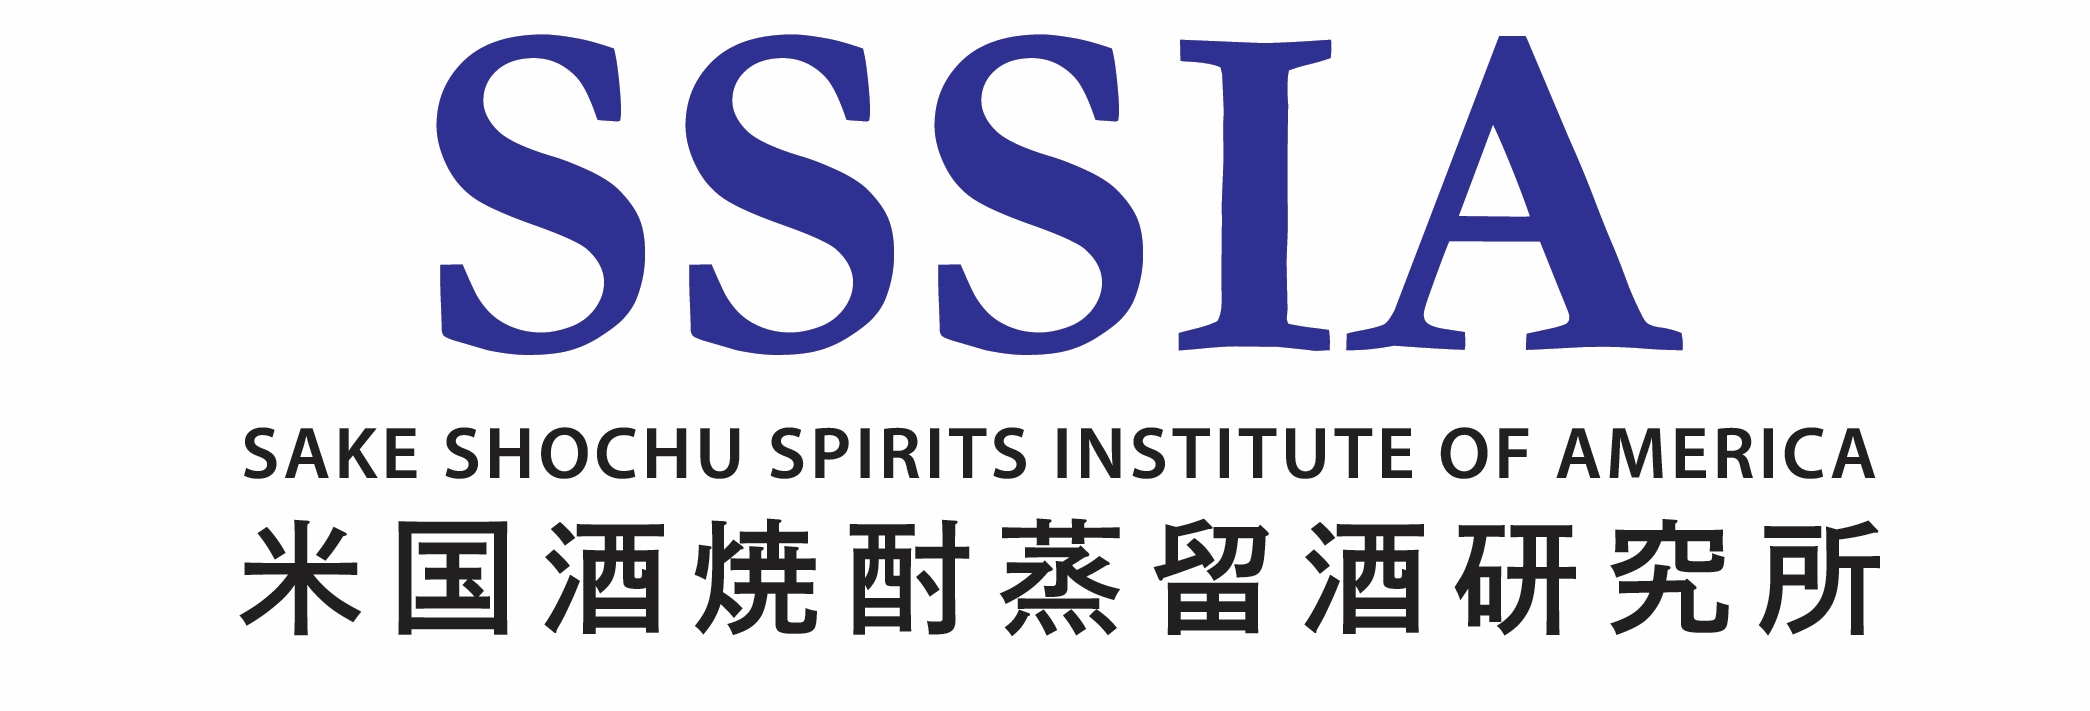 SSSIA logo